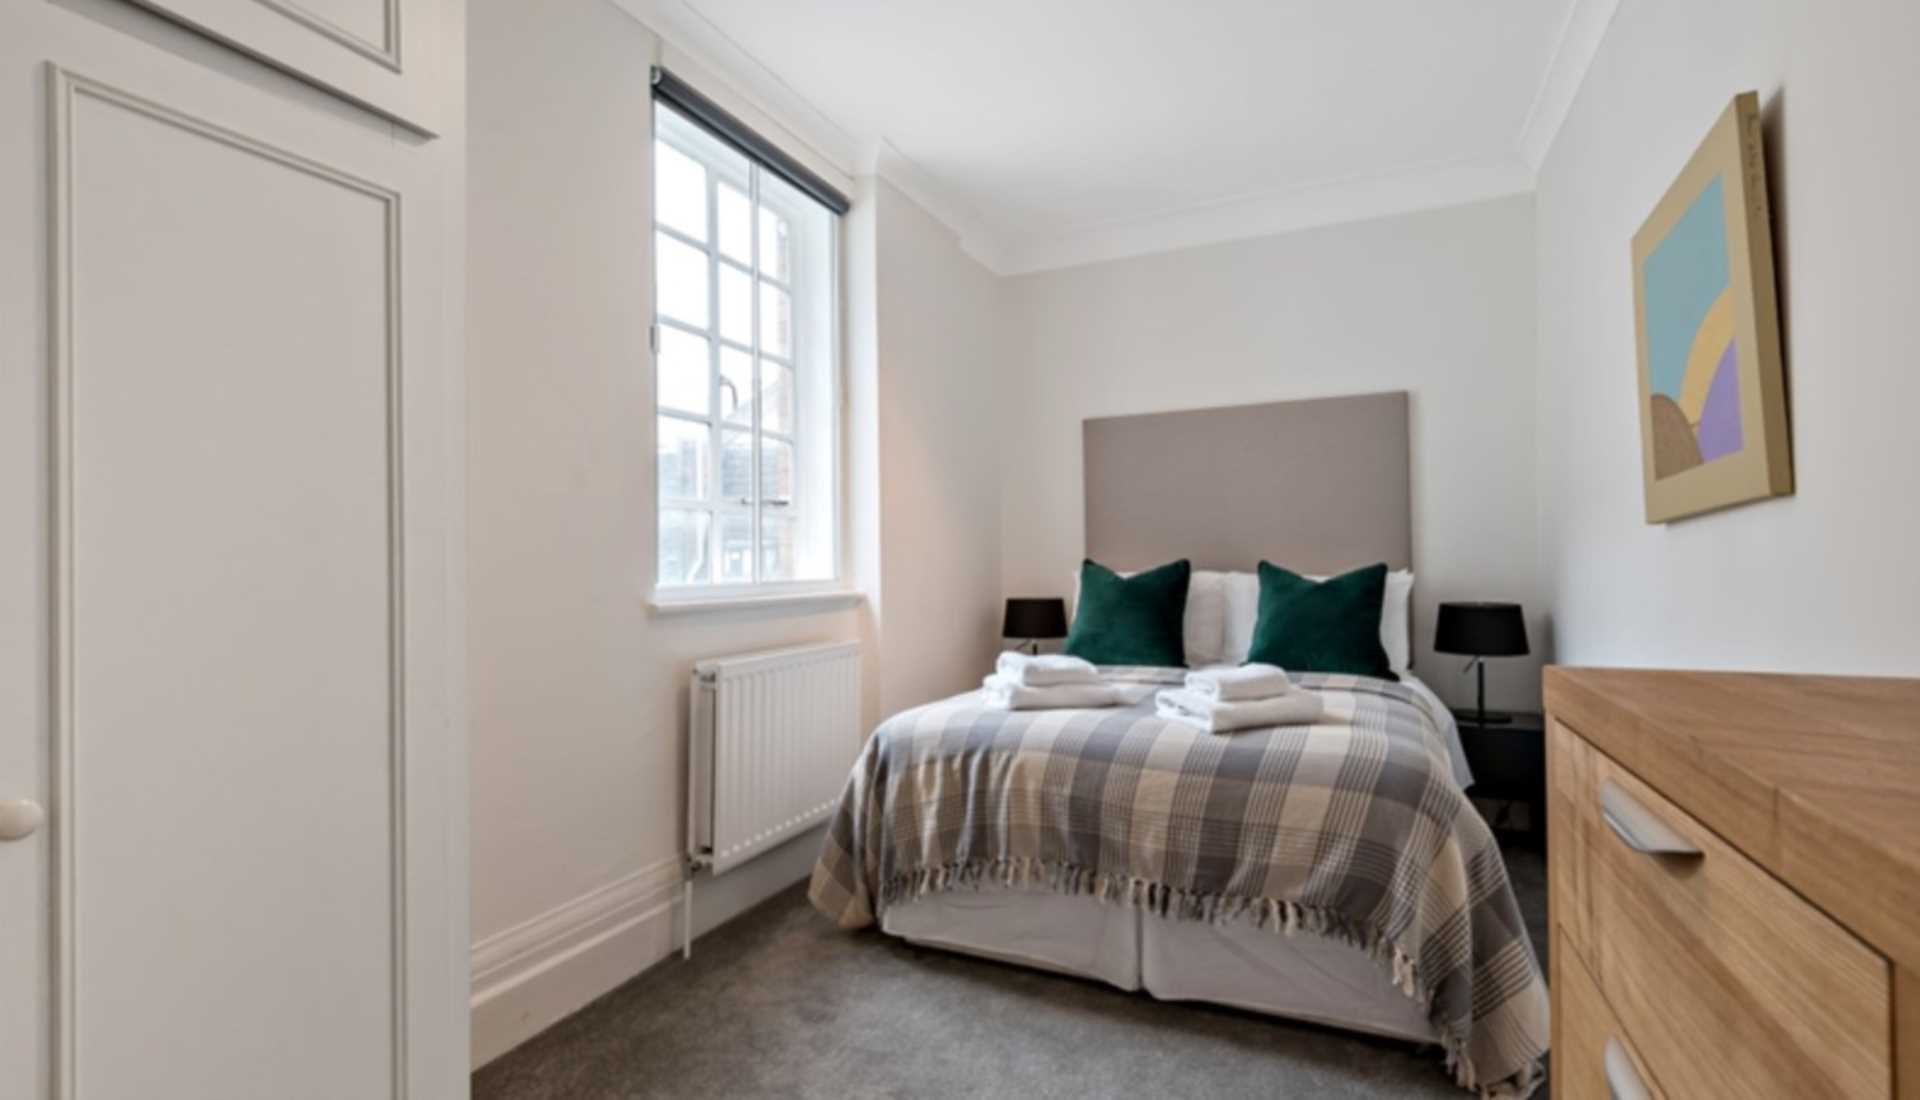 London NW8 7HY 2 bed flat rental property internal/external image-3